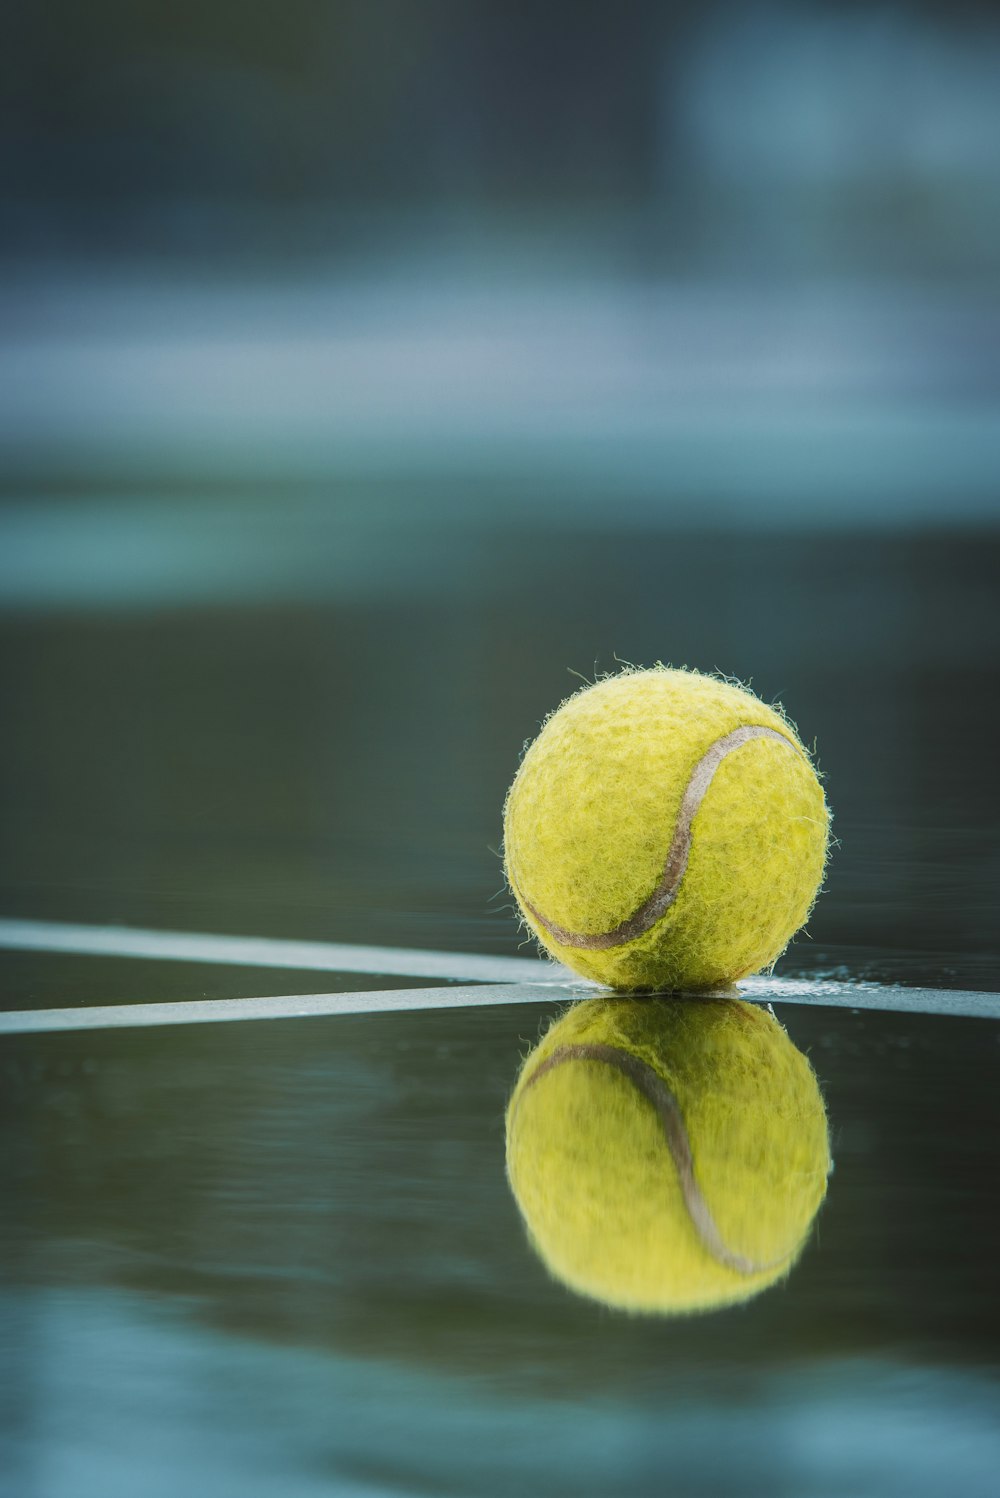 Tennis Balls Pictures | Download Free Images on Unsplash